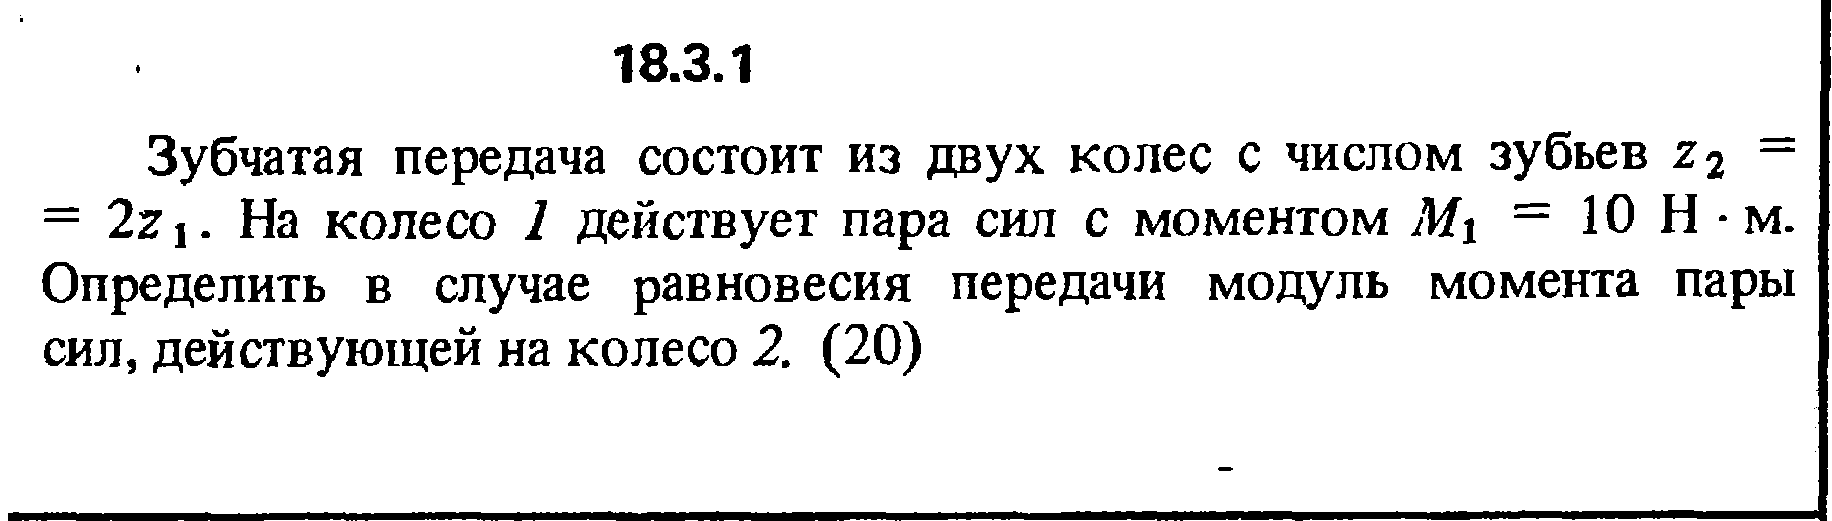 Решение 18.3.1 из сборника (решебника) Кепе О.Е. 1989